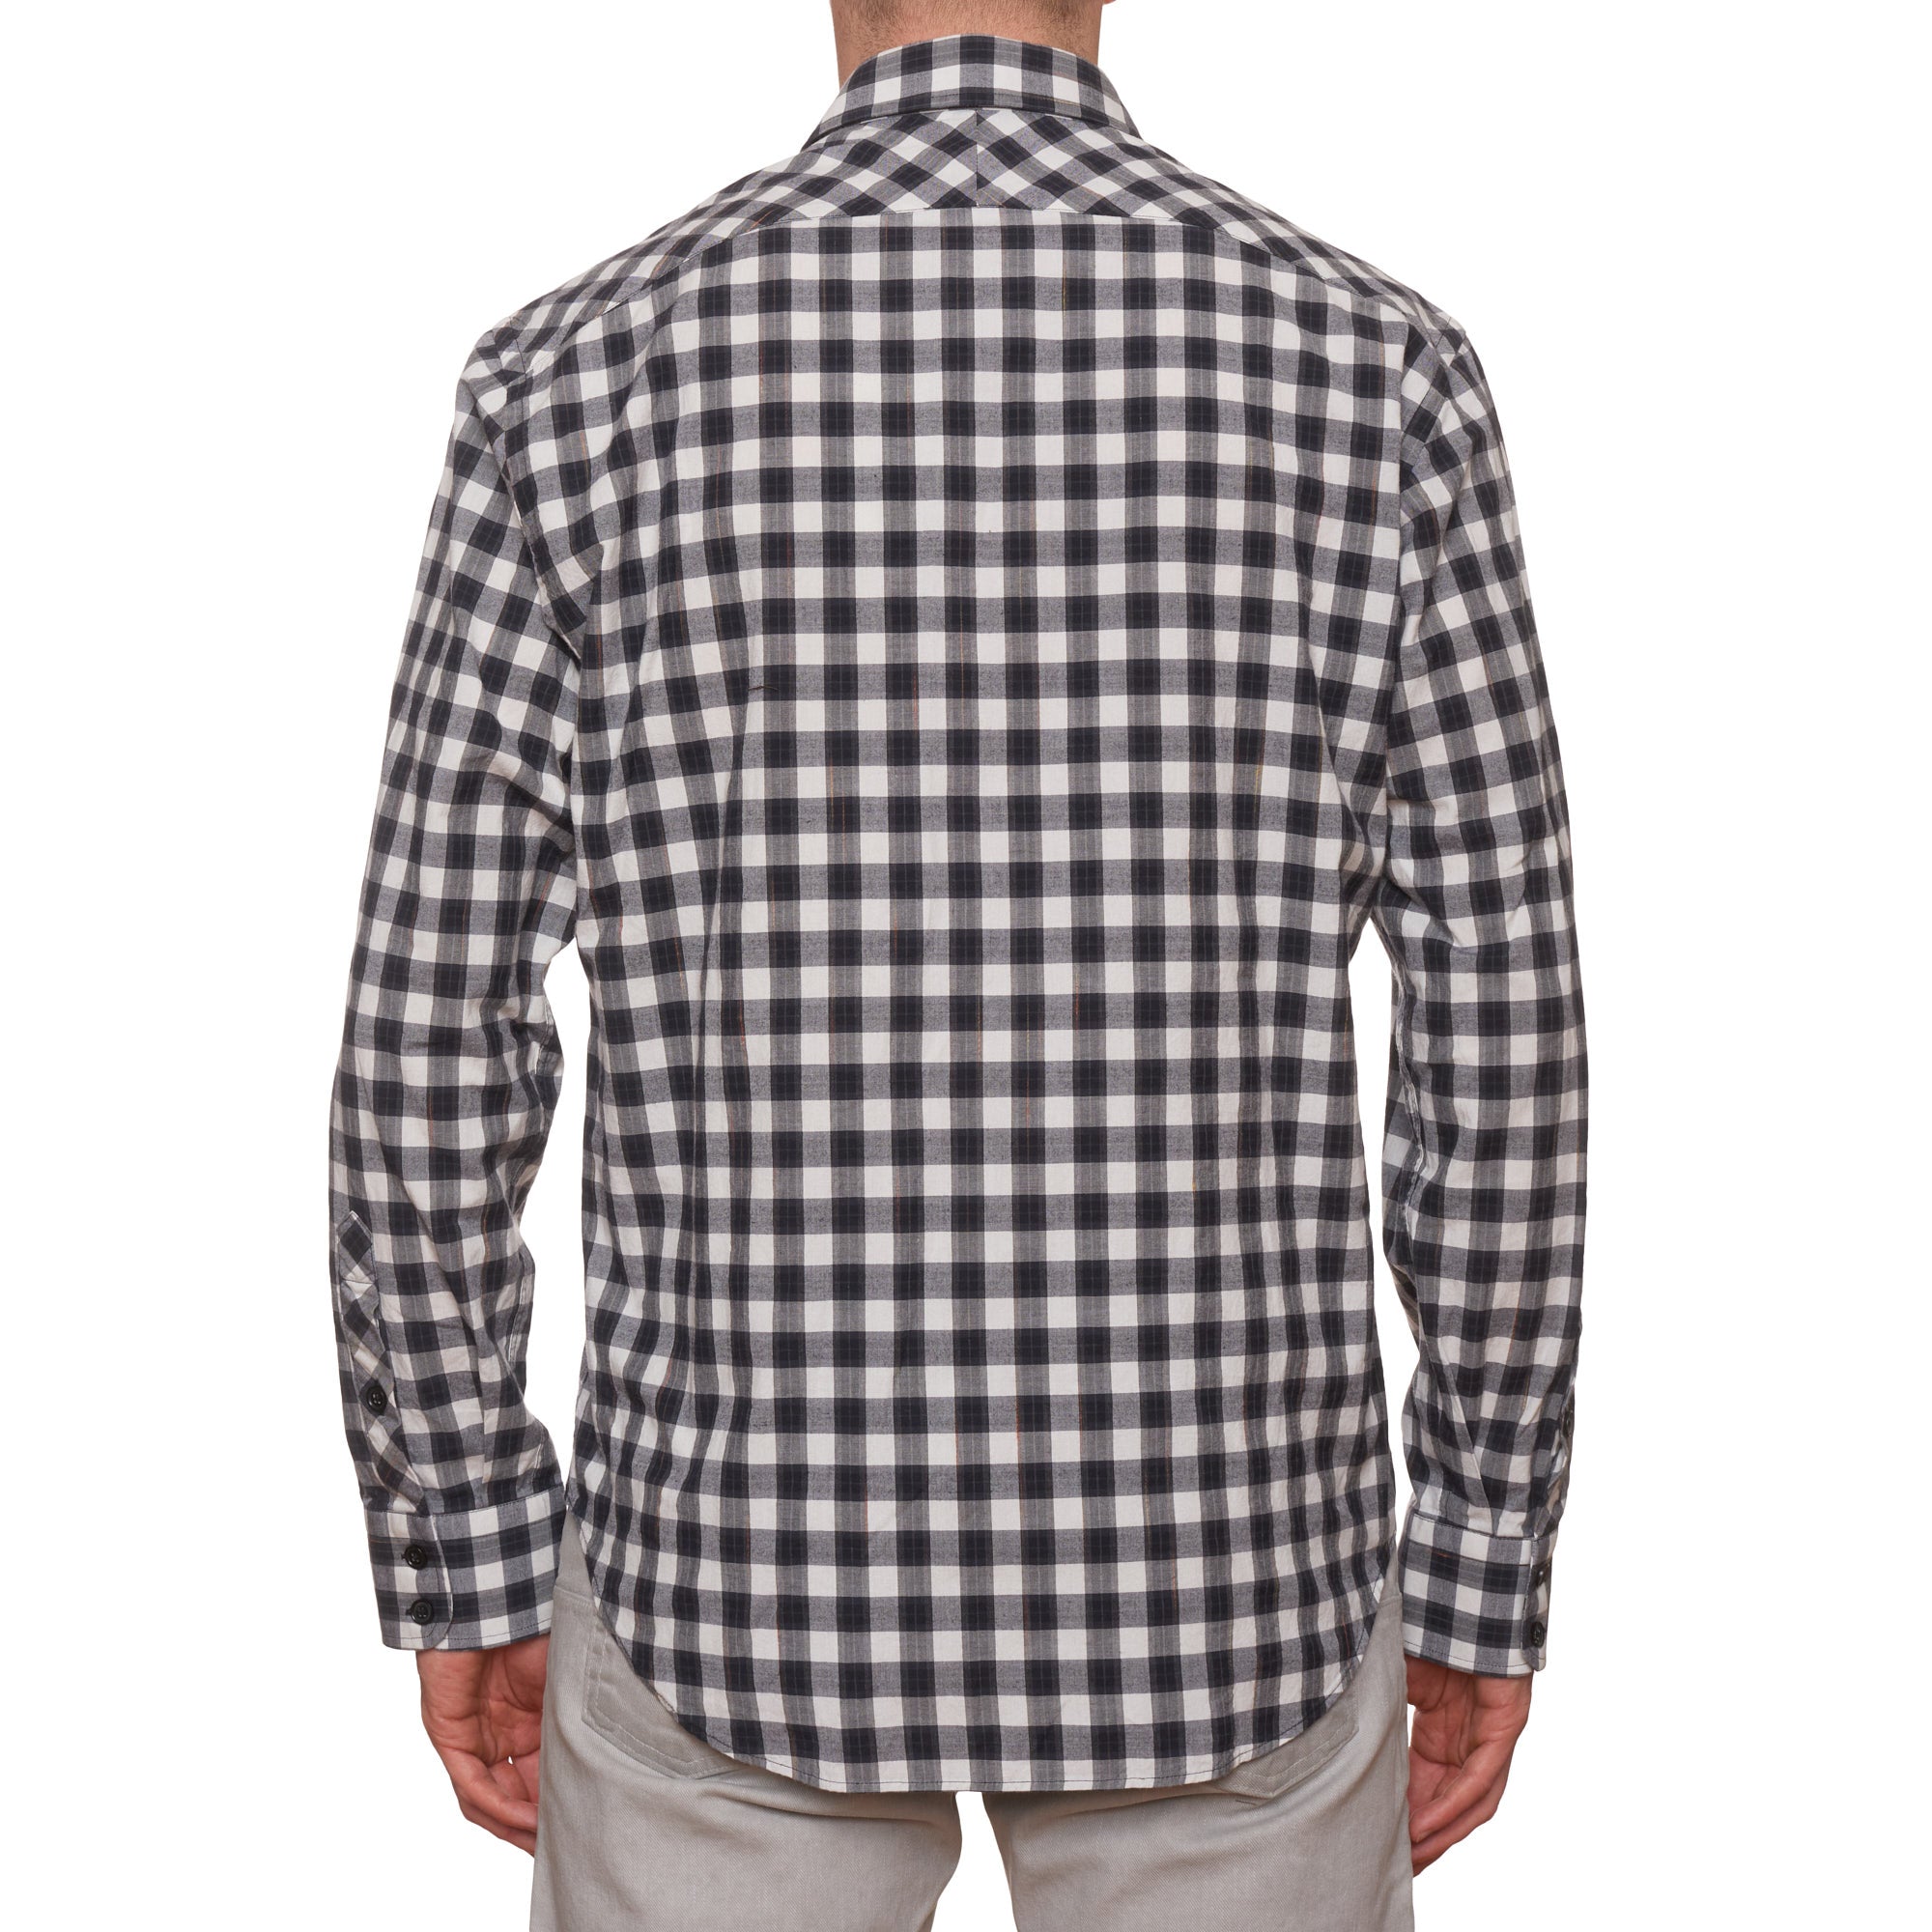 BILLY REID Gray-White Plaid Cotton Casual Shirt NEW US L Standard Cut BILLY REID